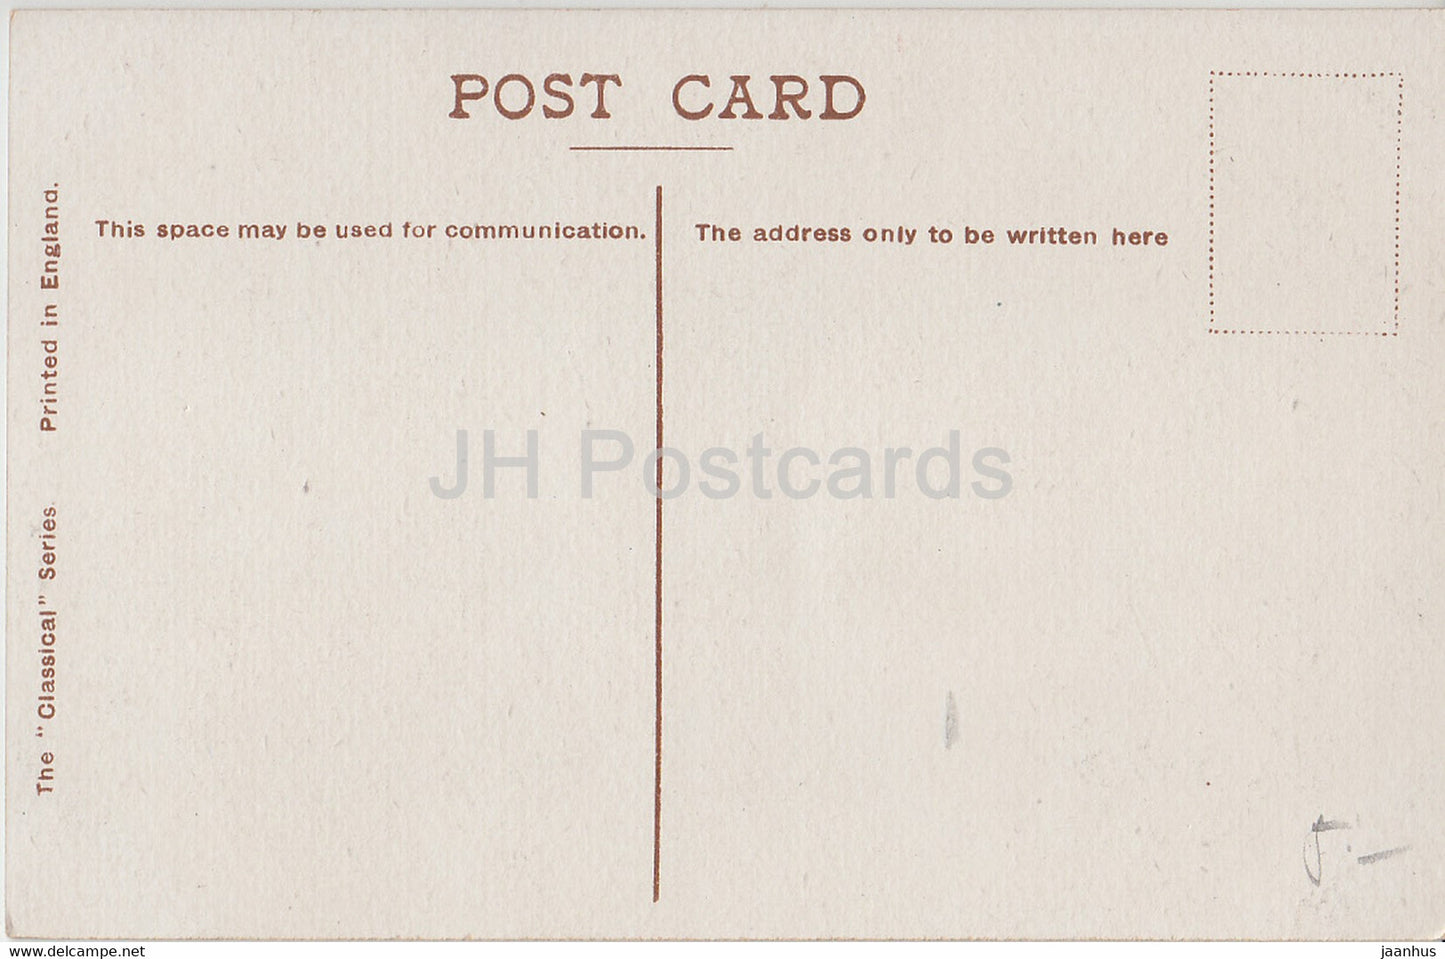 Londres - Bank of England &amp; Royal Exchange - voitures - carte postale ancienne - Angleterre - Royaume-Uni - inutilisée